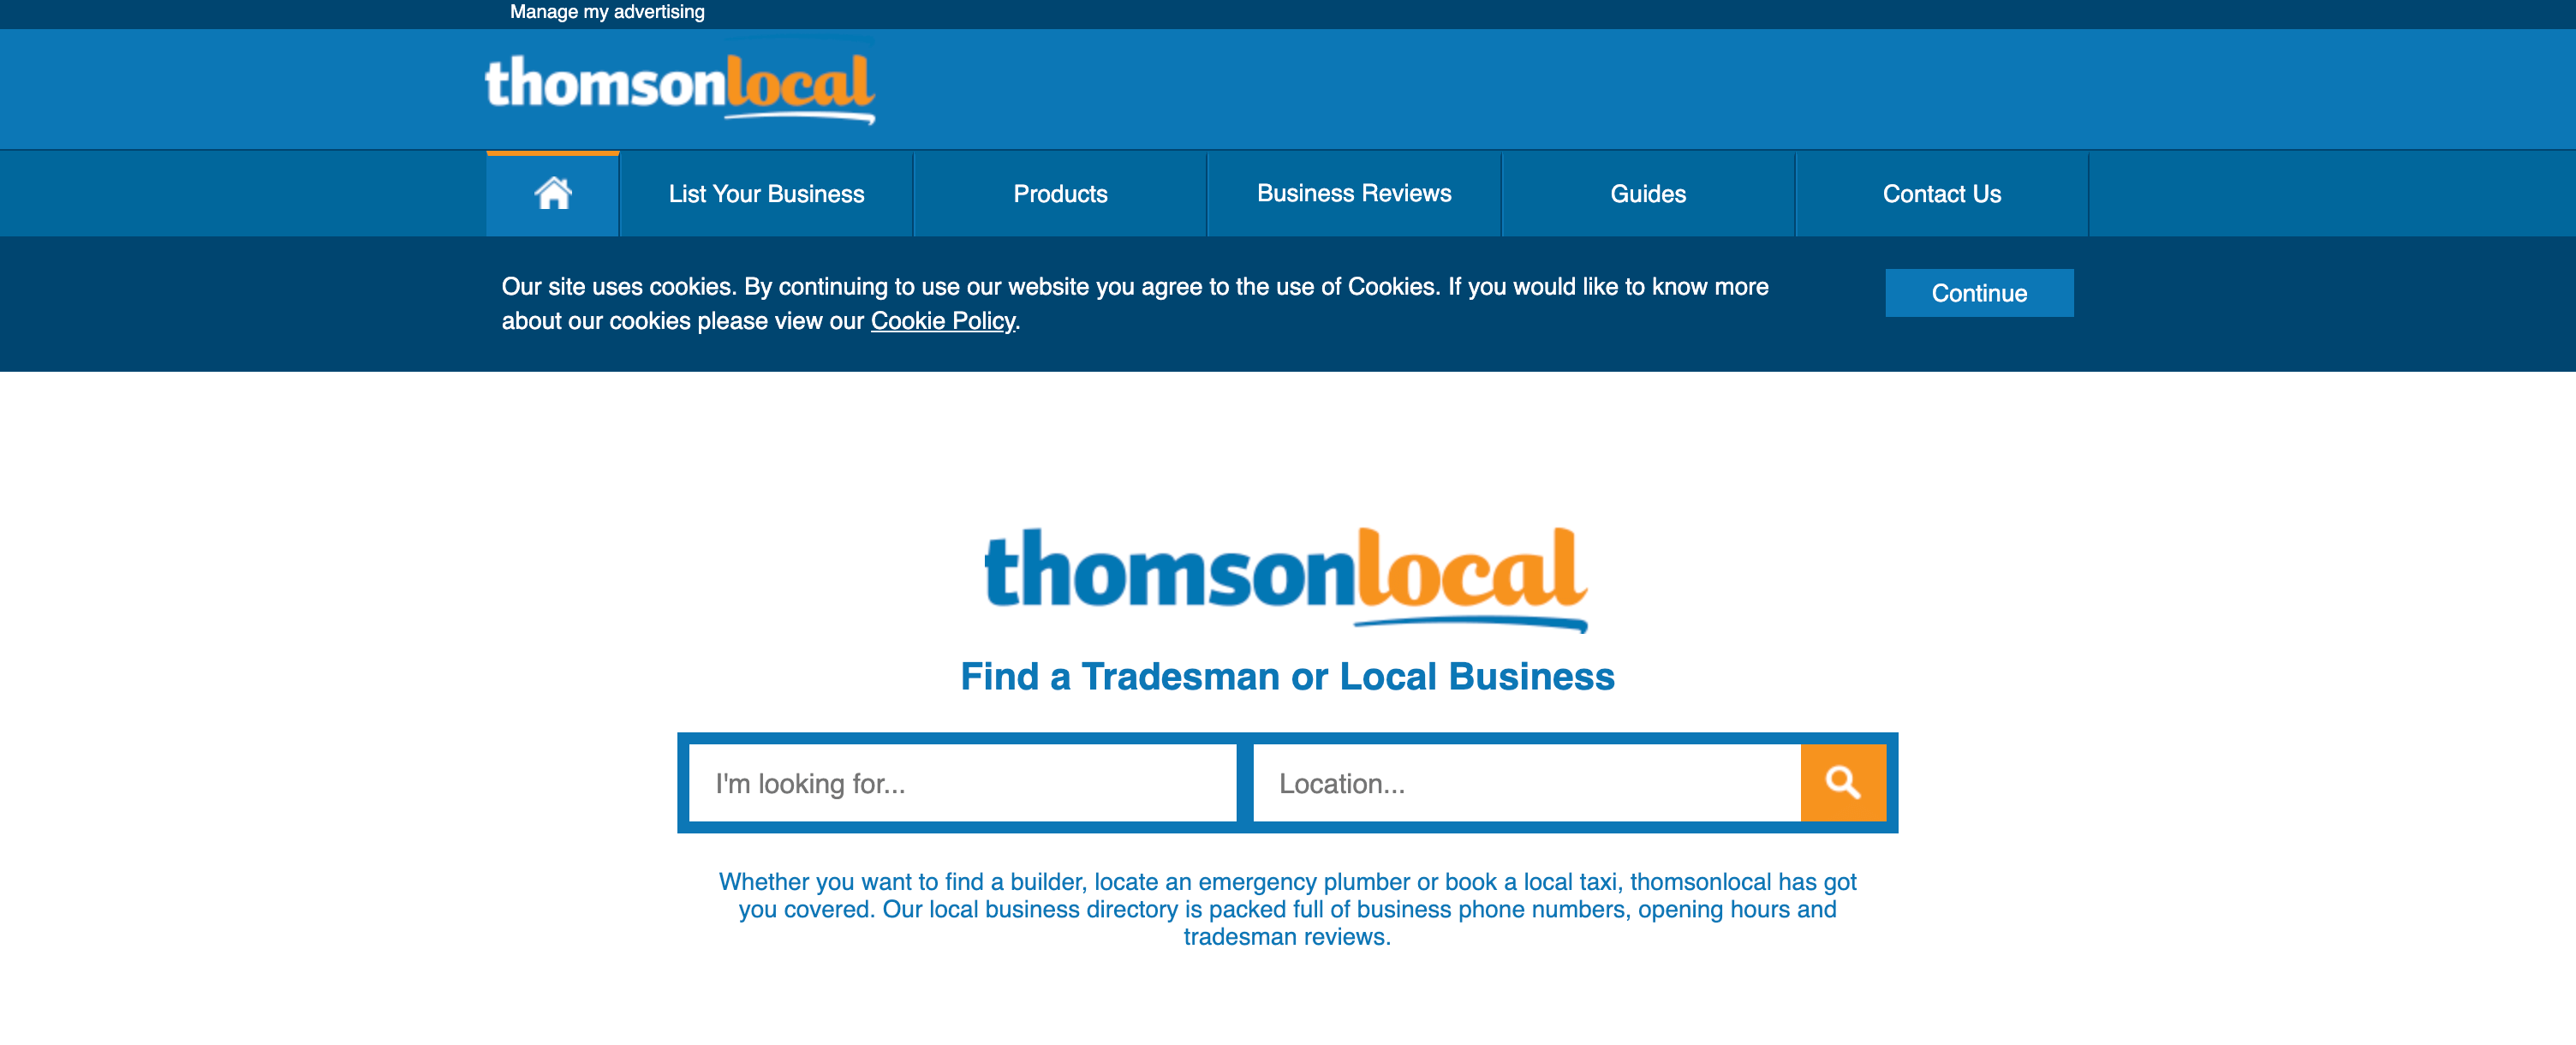 thompson local